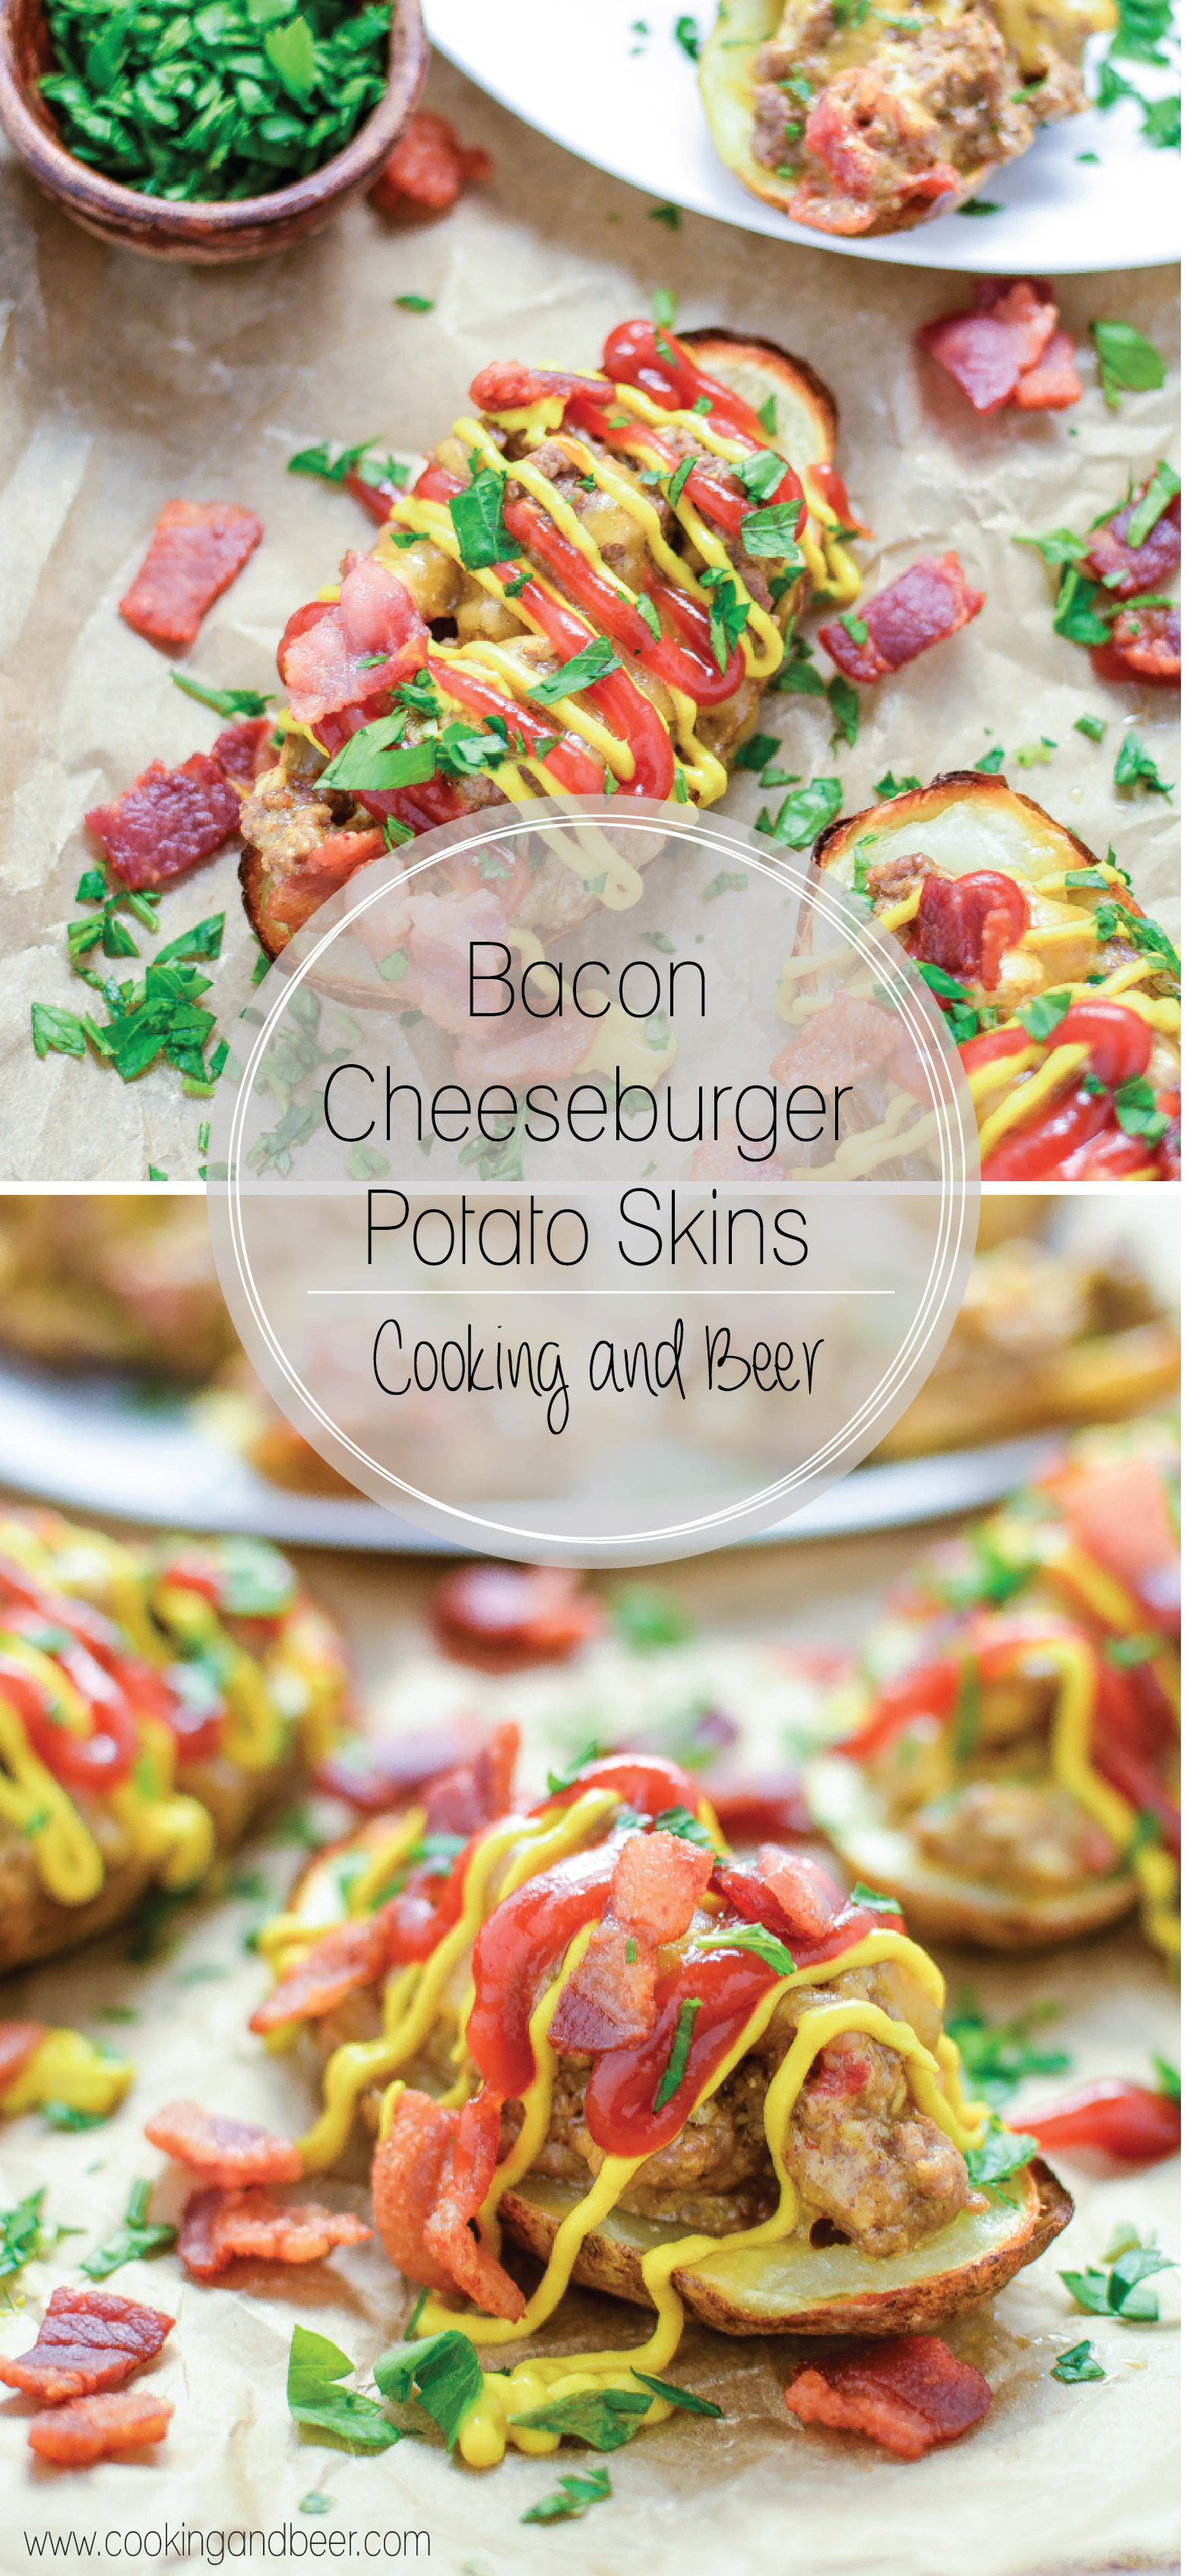 Bacon Cheeseburger Potato Skins: a fun twist on classic potato skins highlighting the flavors of your favorite cheeseburger!